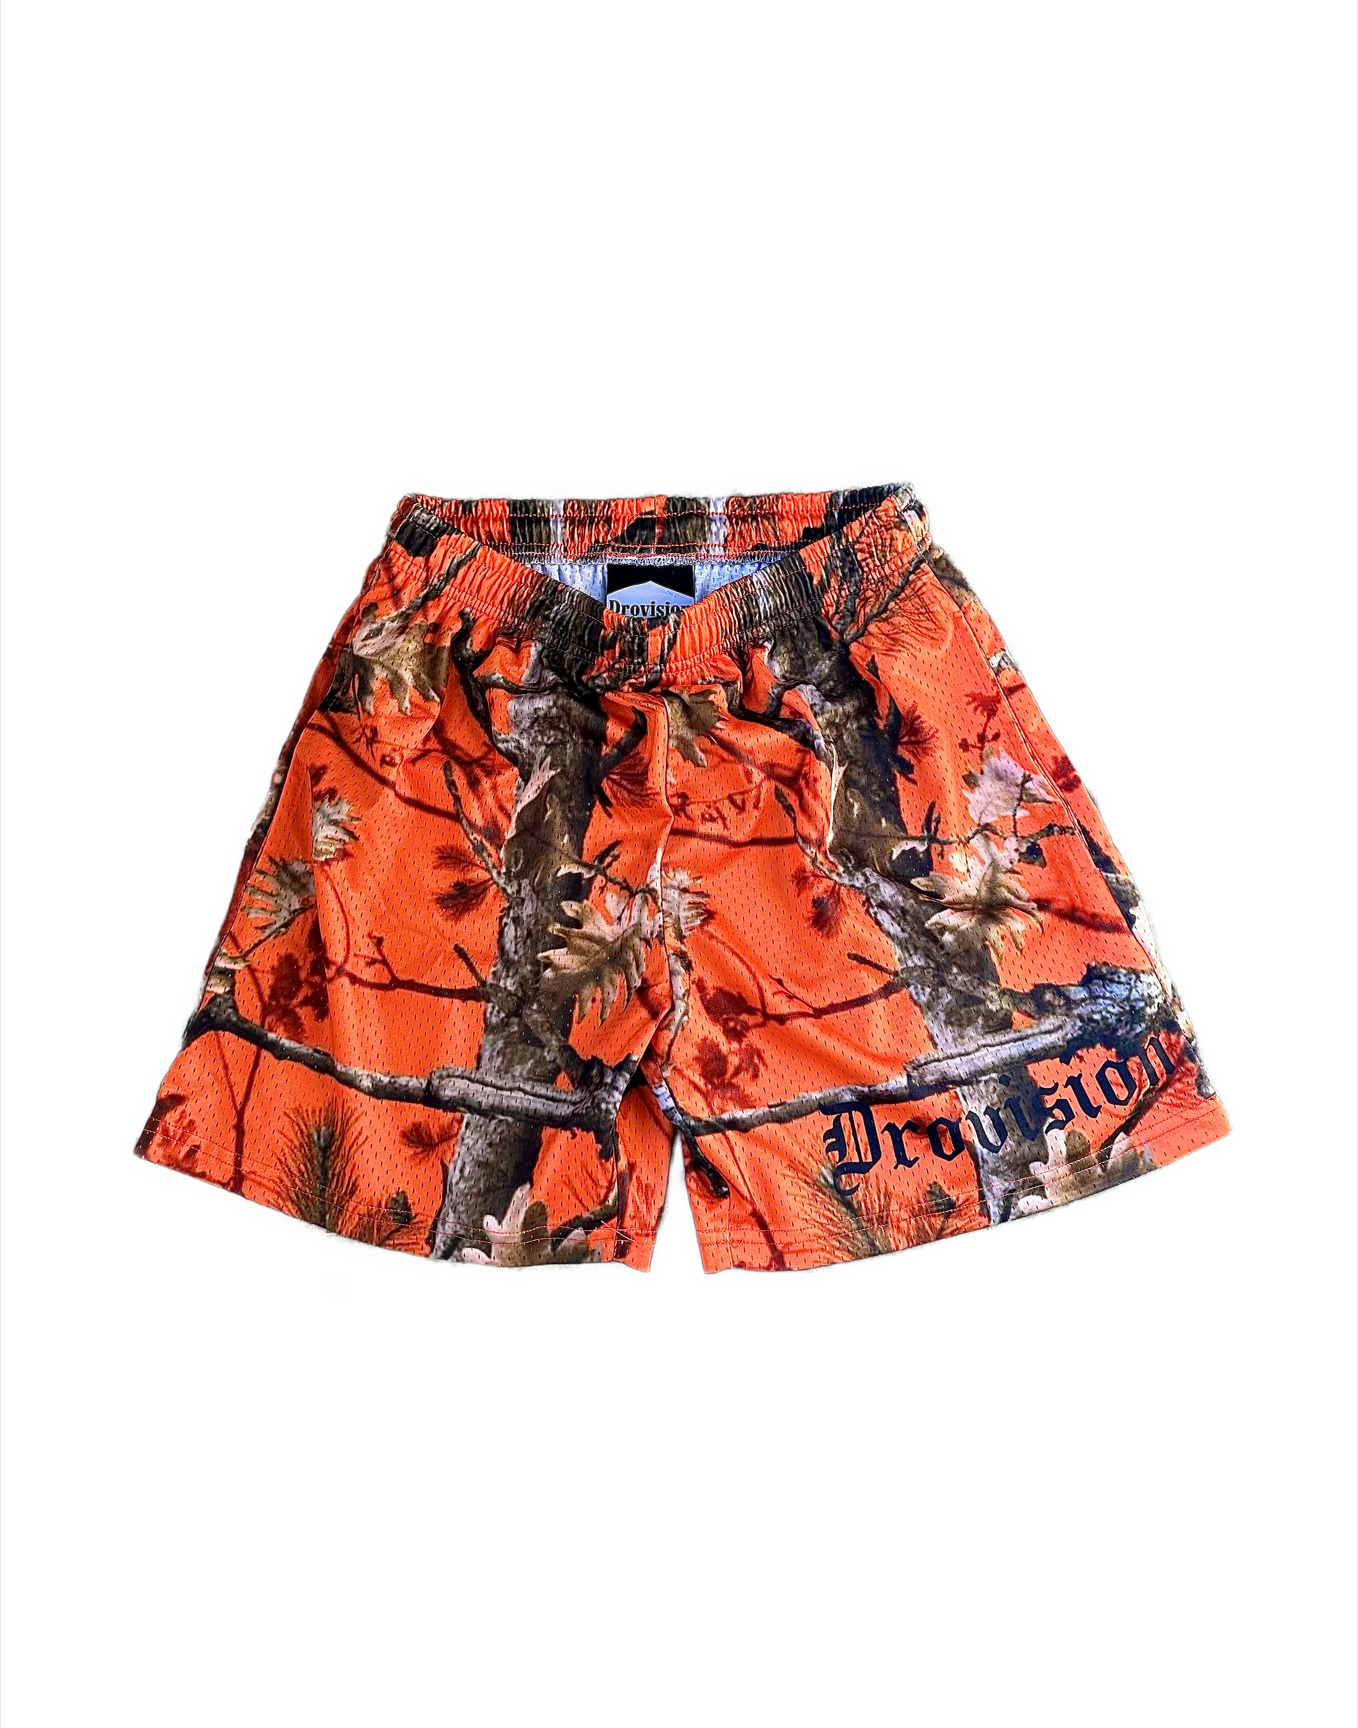 Drovision Orange Camo Shorts (DRO)